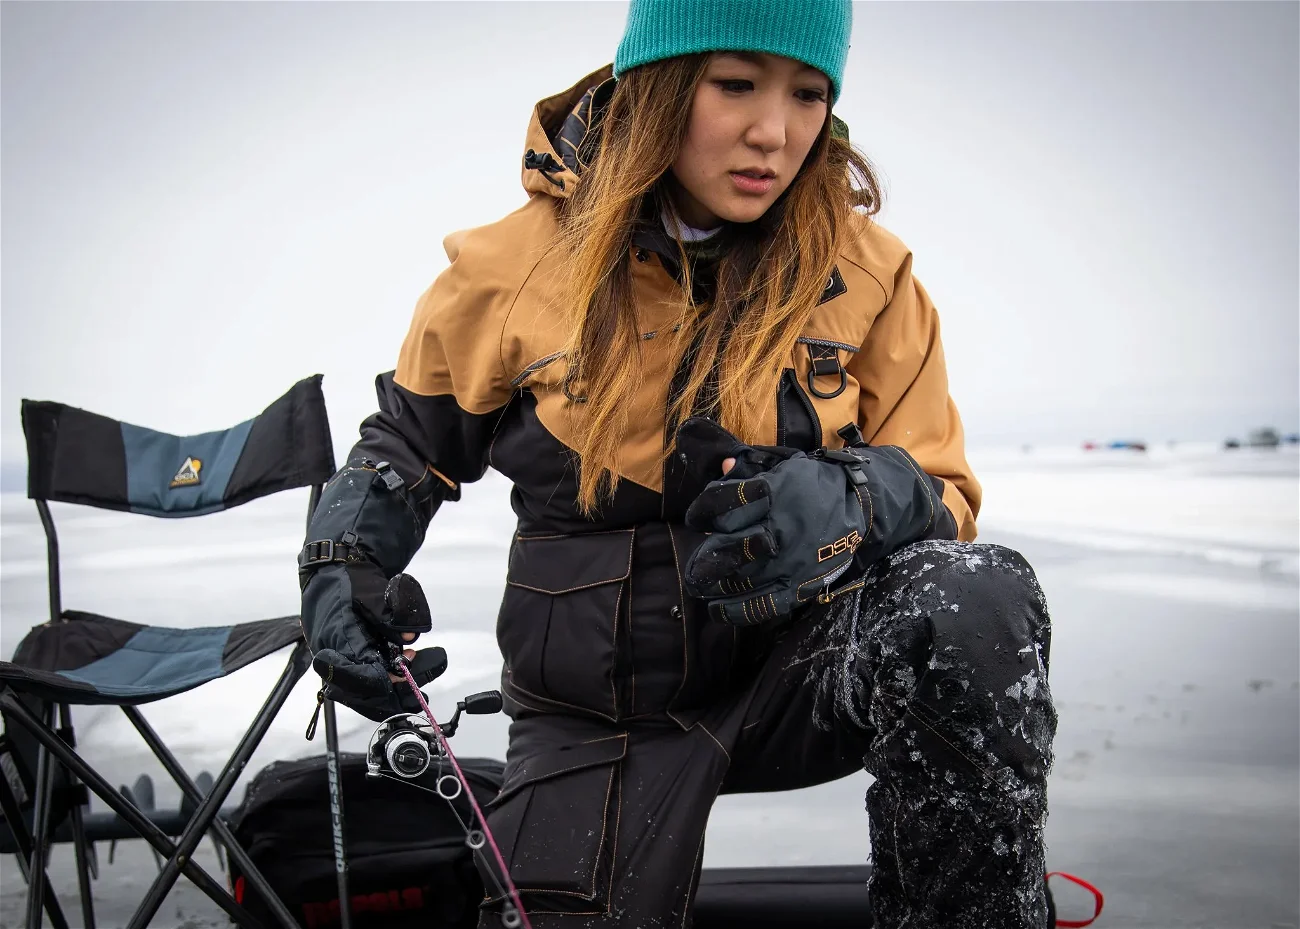 DSG Women's Avid Ice Fishing Drop Seat Bib - The Warming Store